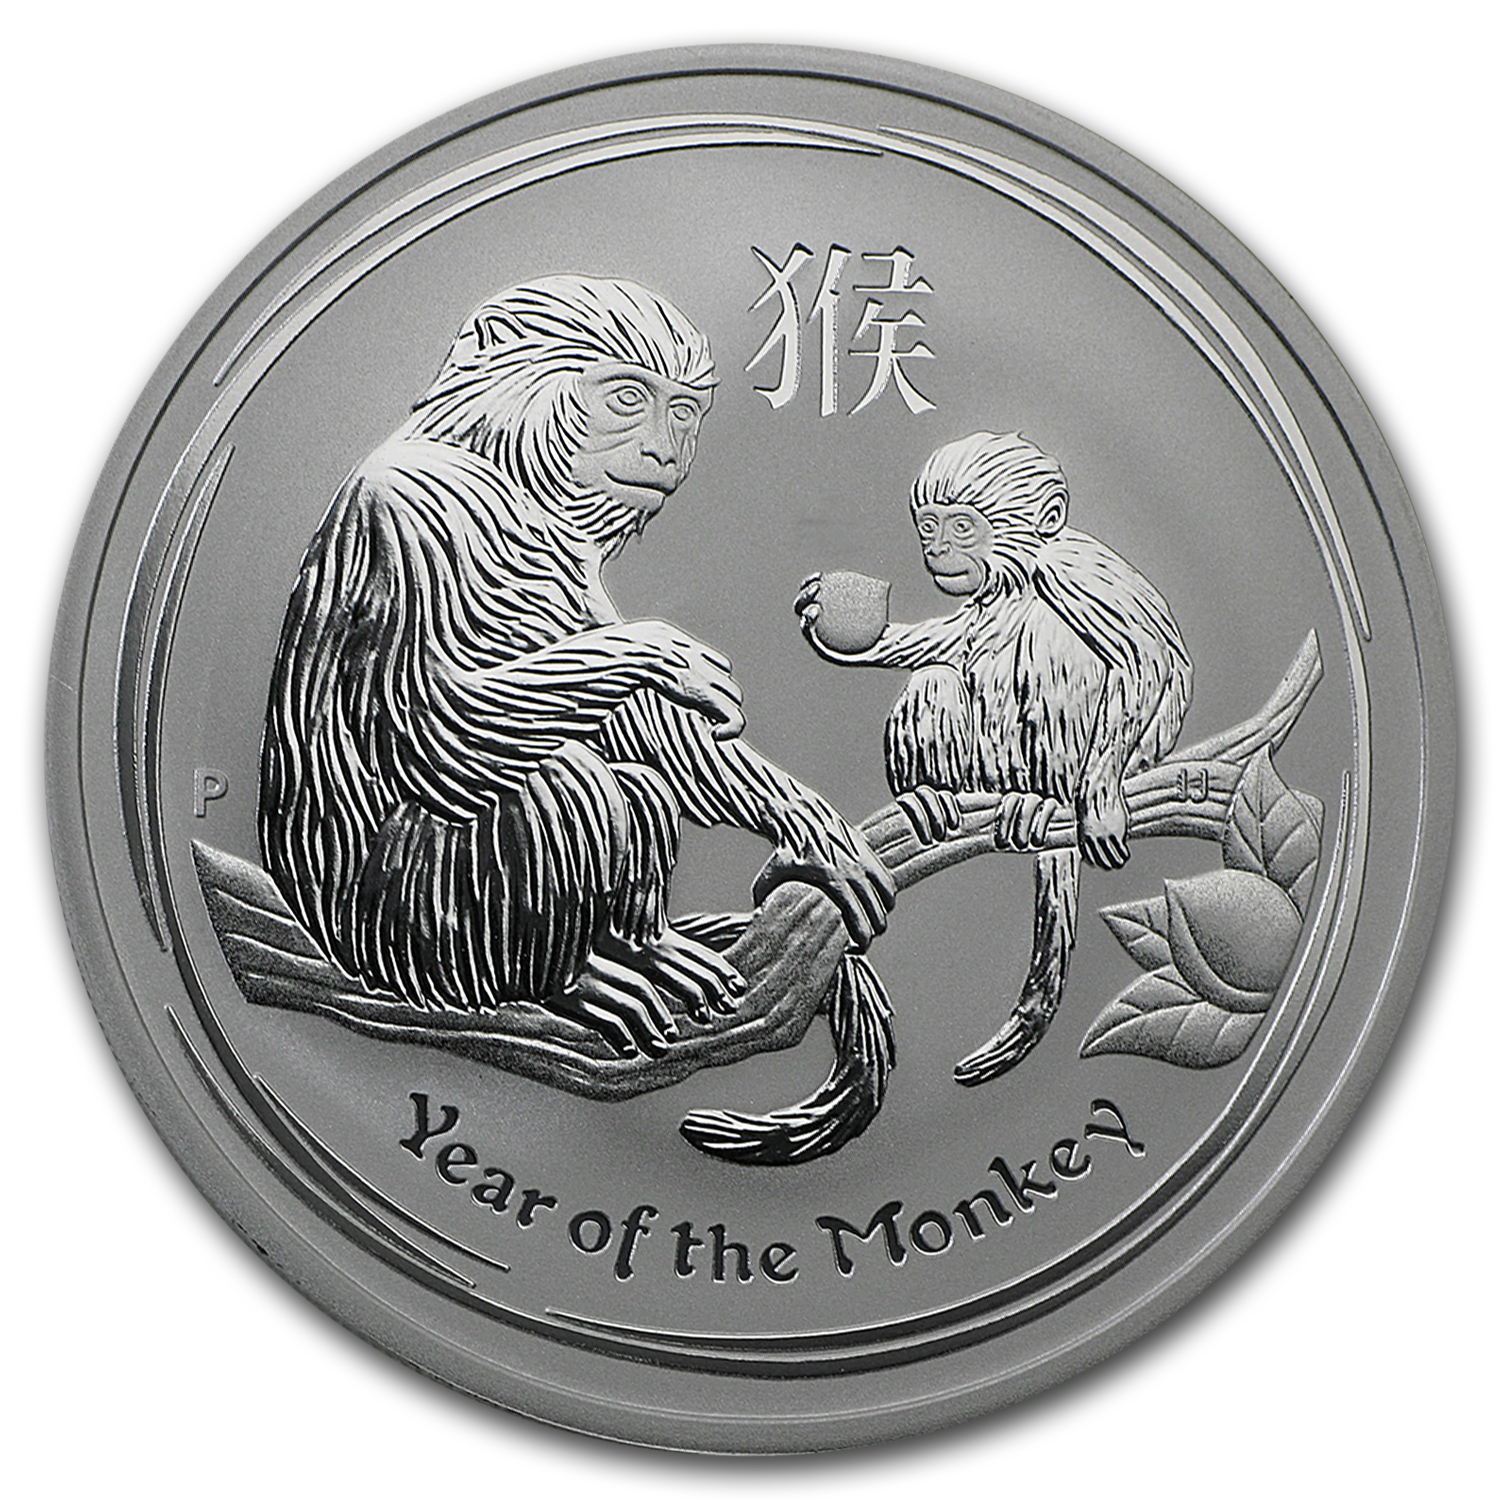 Details about   Australia Perth Mint 2016 Lunar Chinese Monkey Zodiac Colorized Silver Coin 1oz